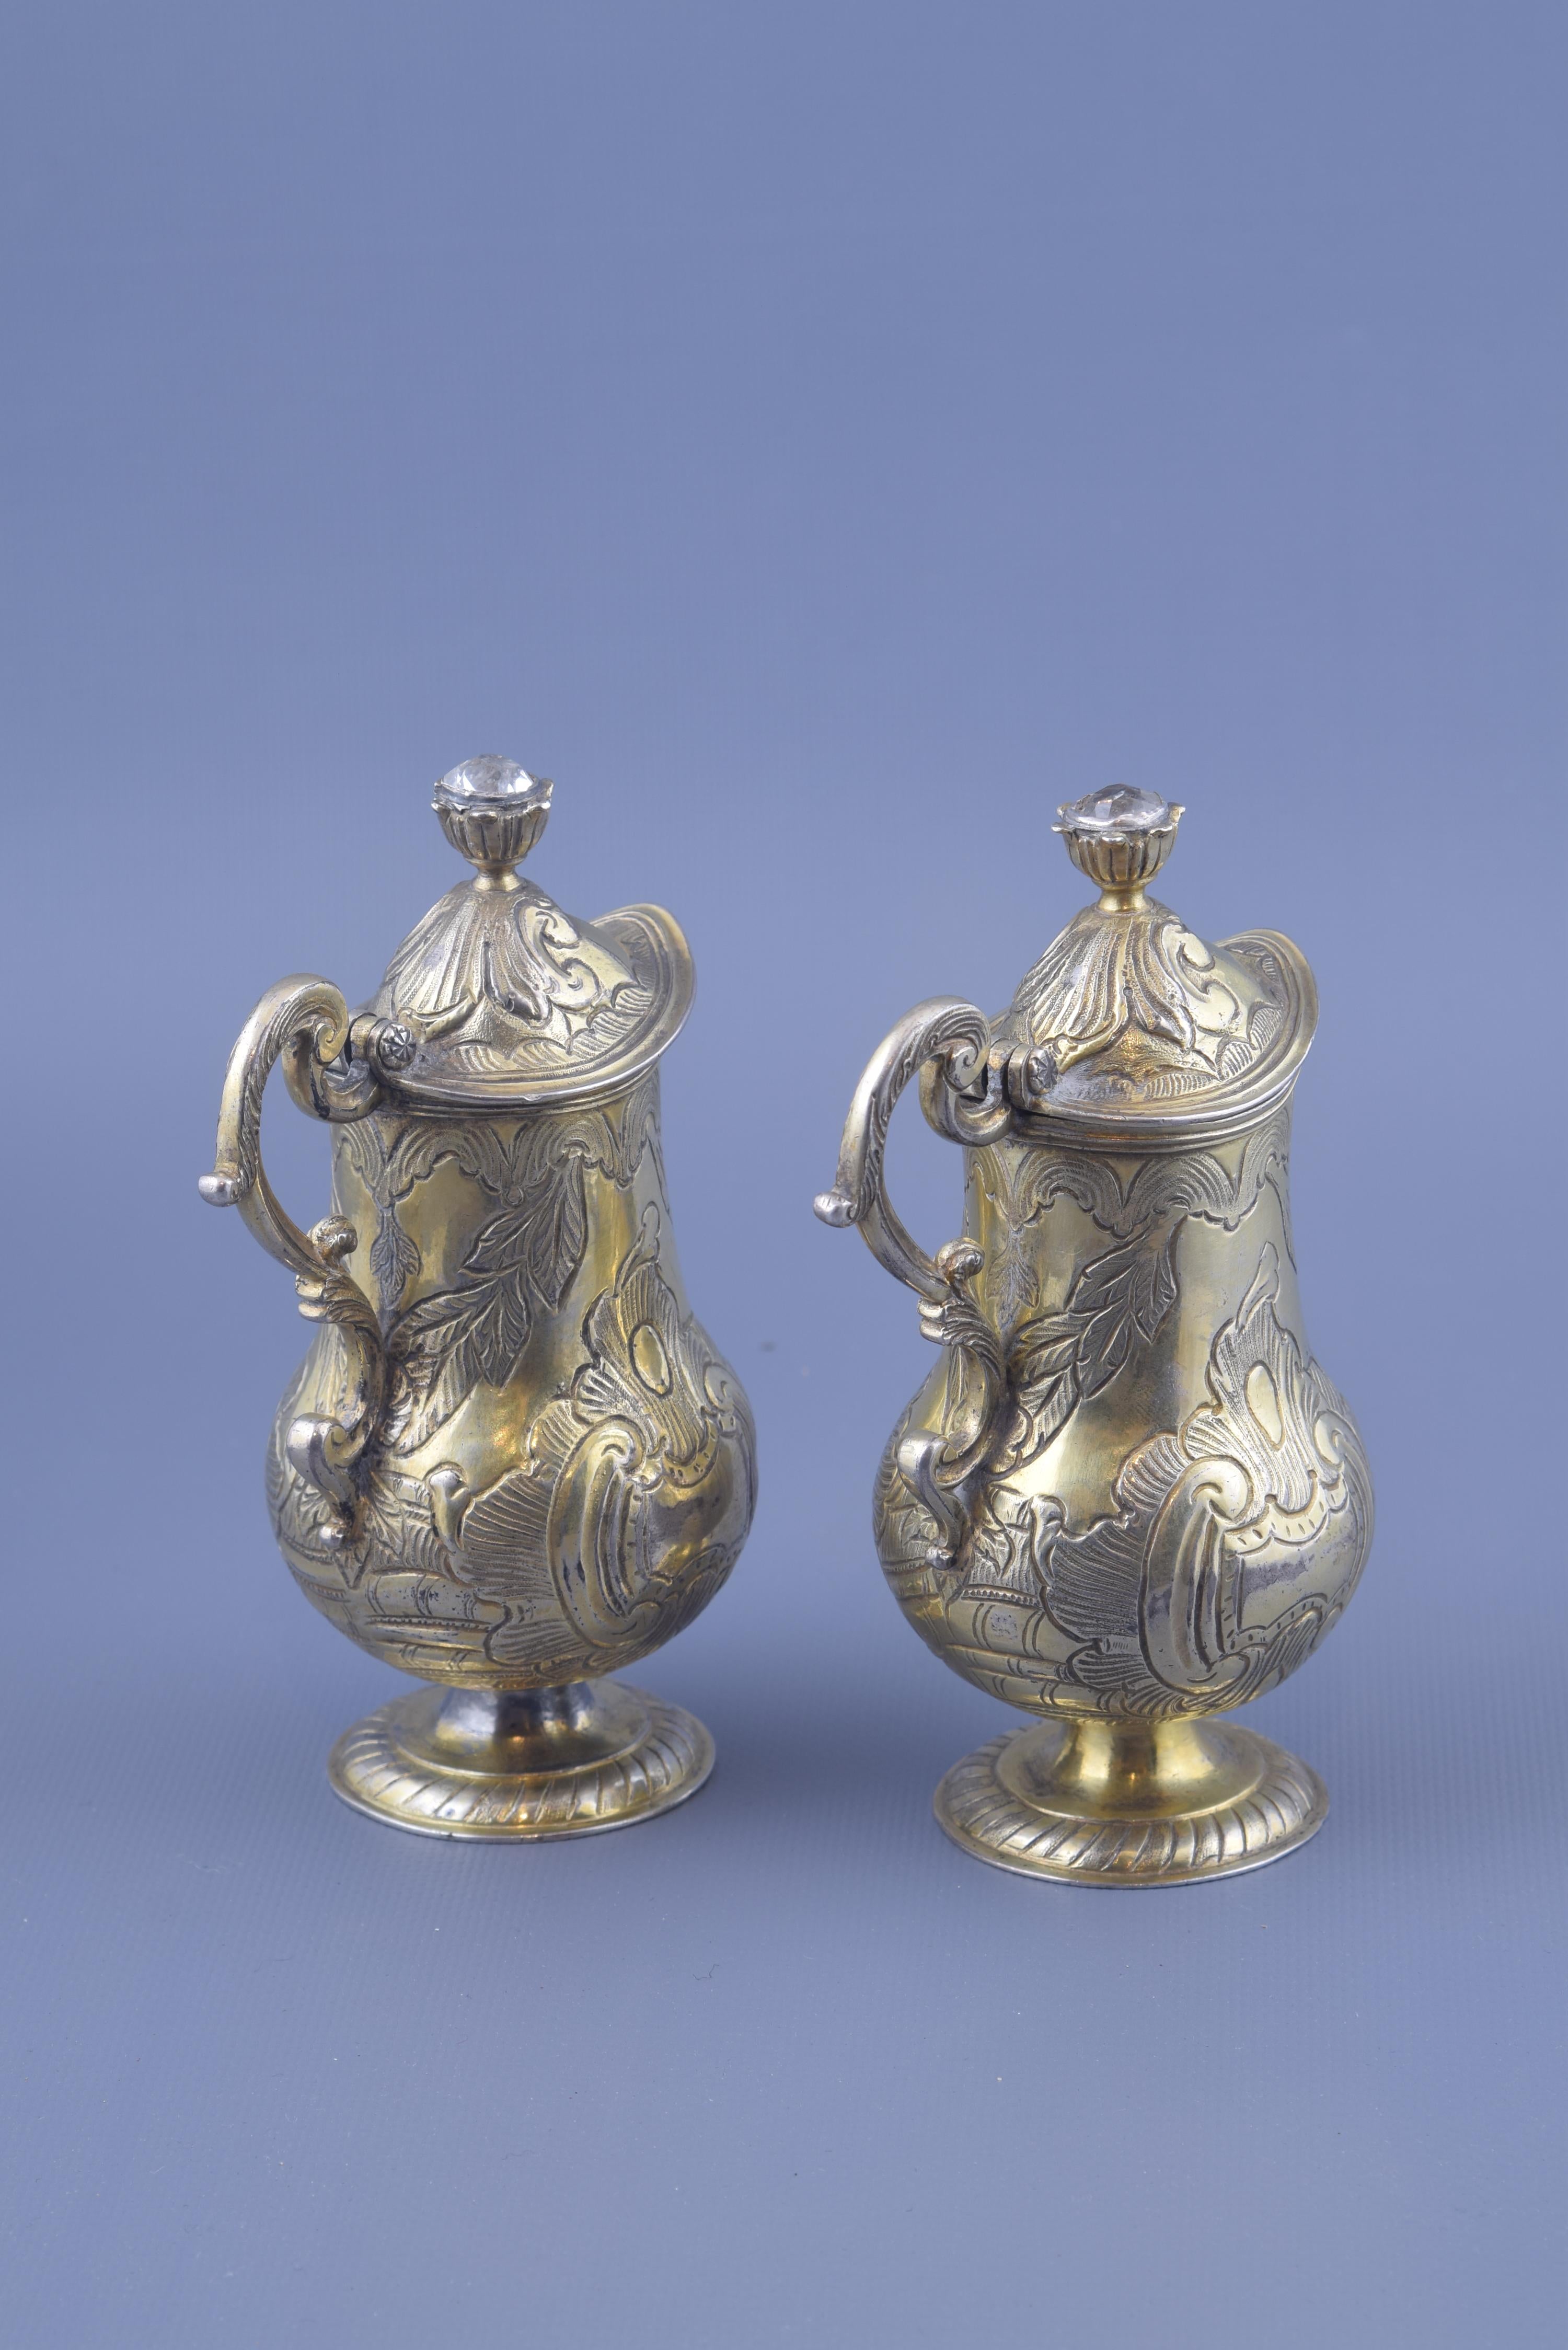 18th Century and Earlier Gilt Silver Cruet Set, Pamplona Hallmarks, Spain, 18th Century